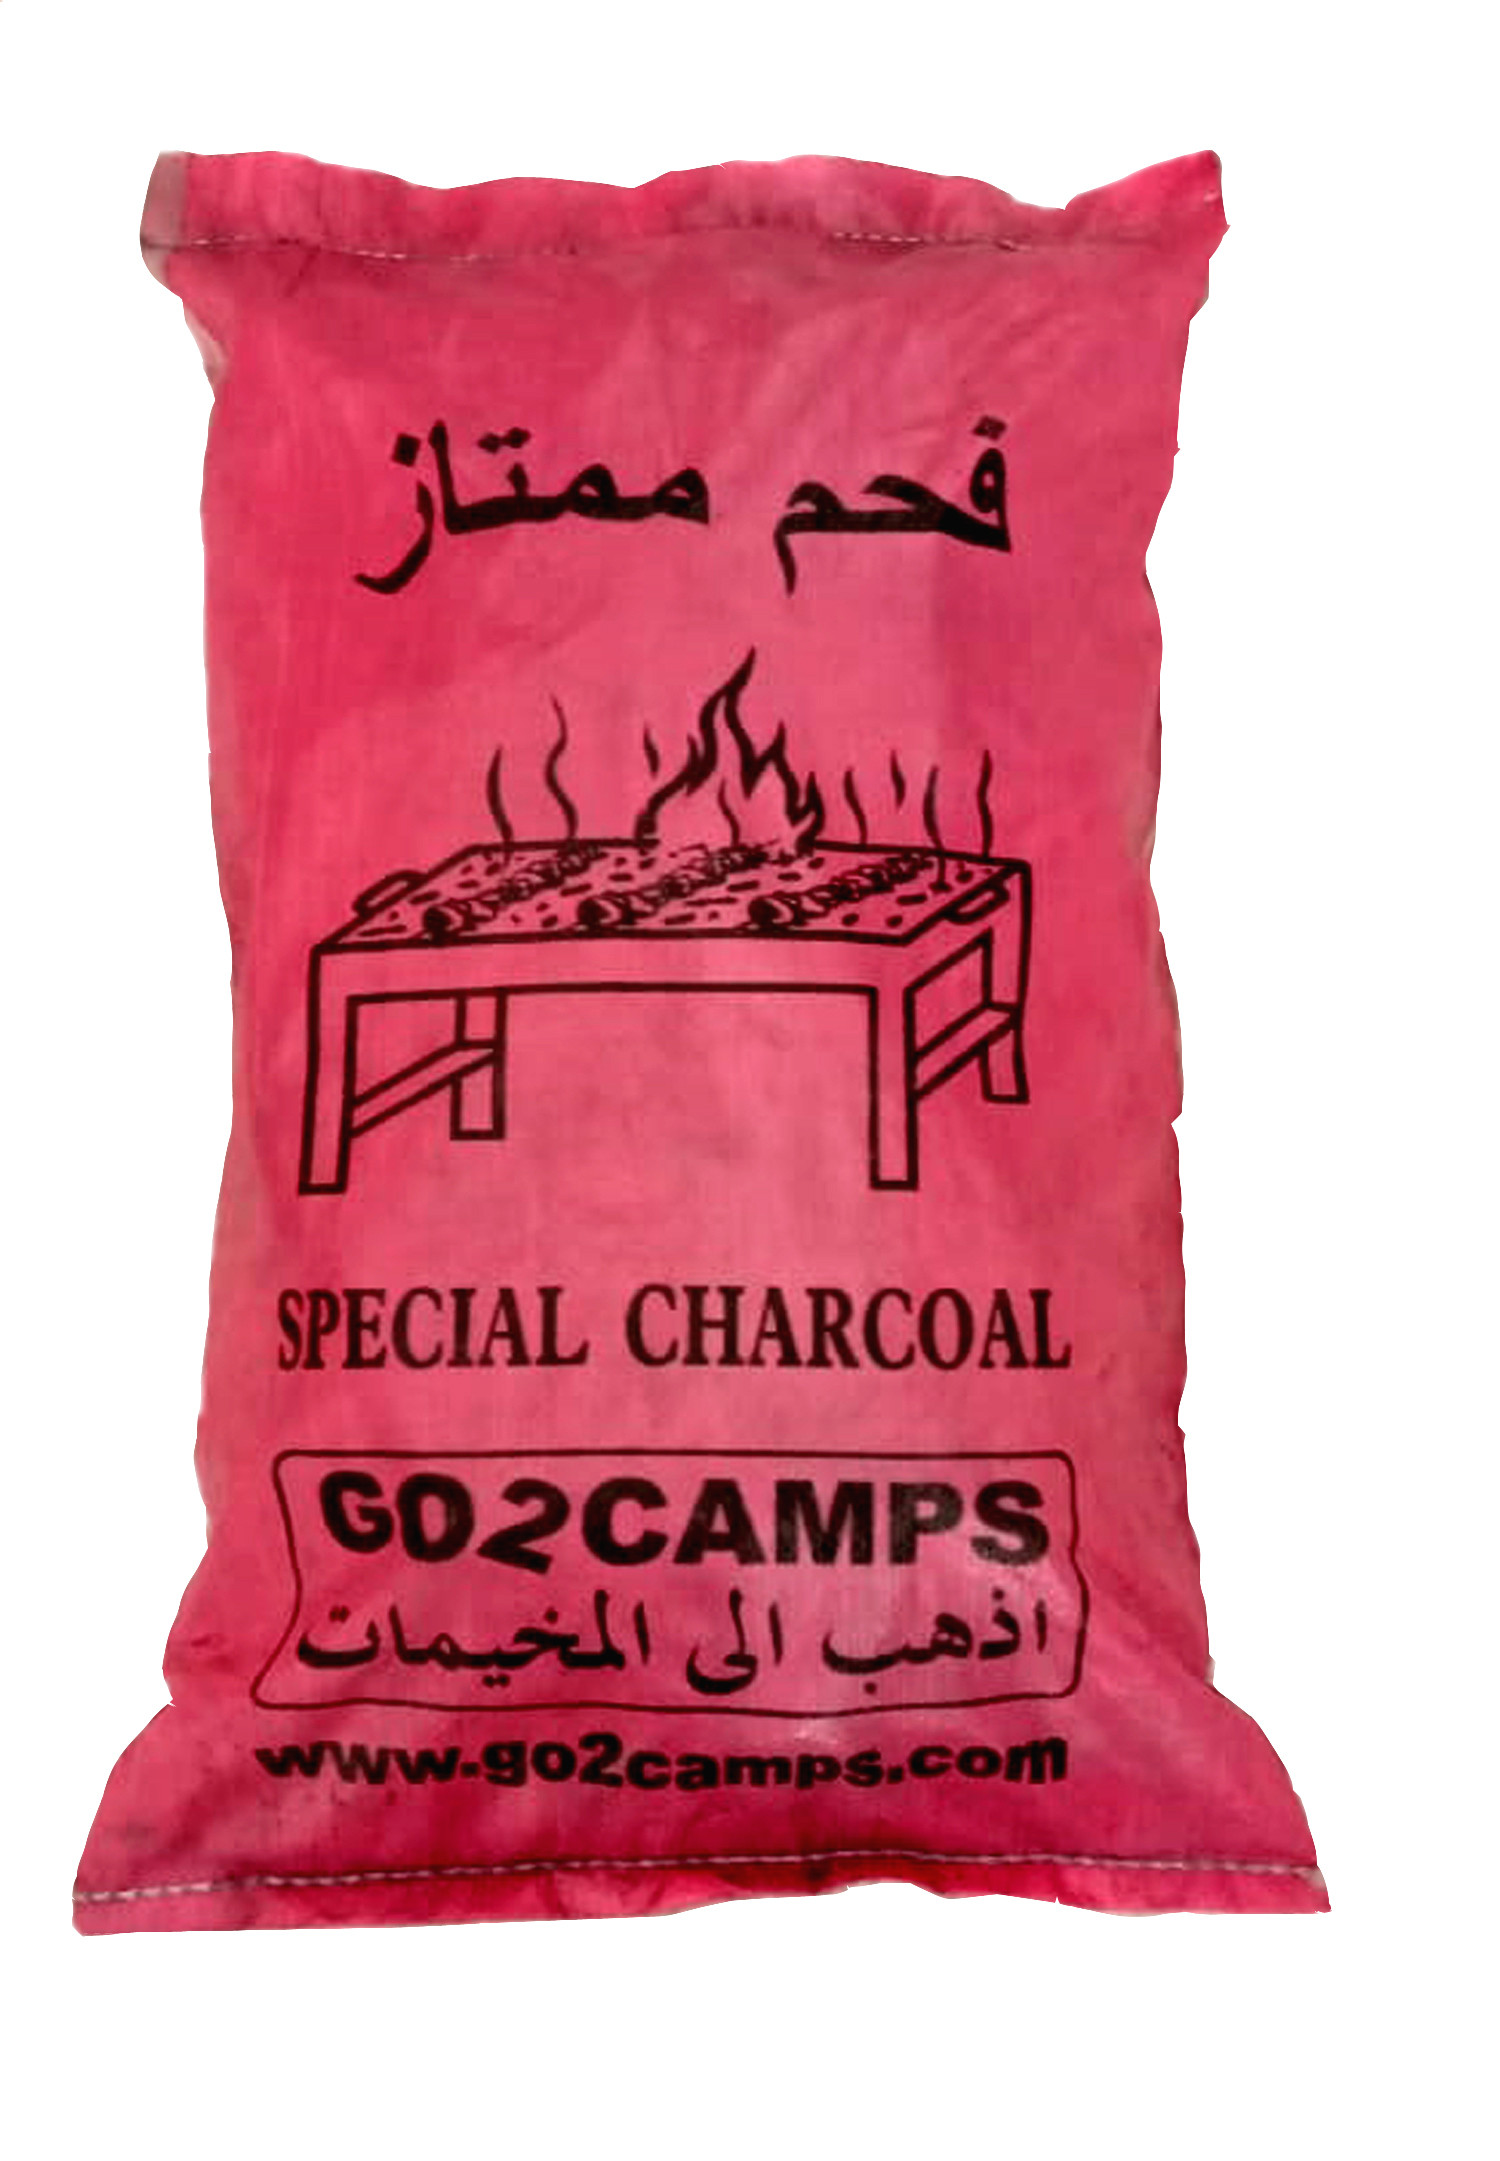 GO2CAMPS Hardwood charcoal-BBQ Natural Charcoal -10 KG